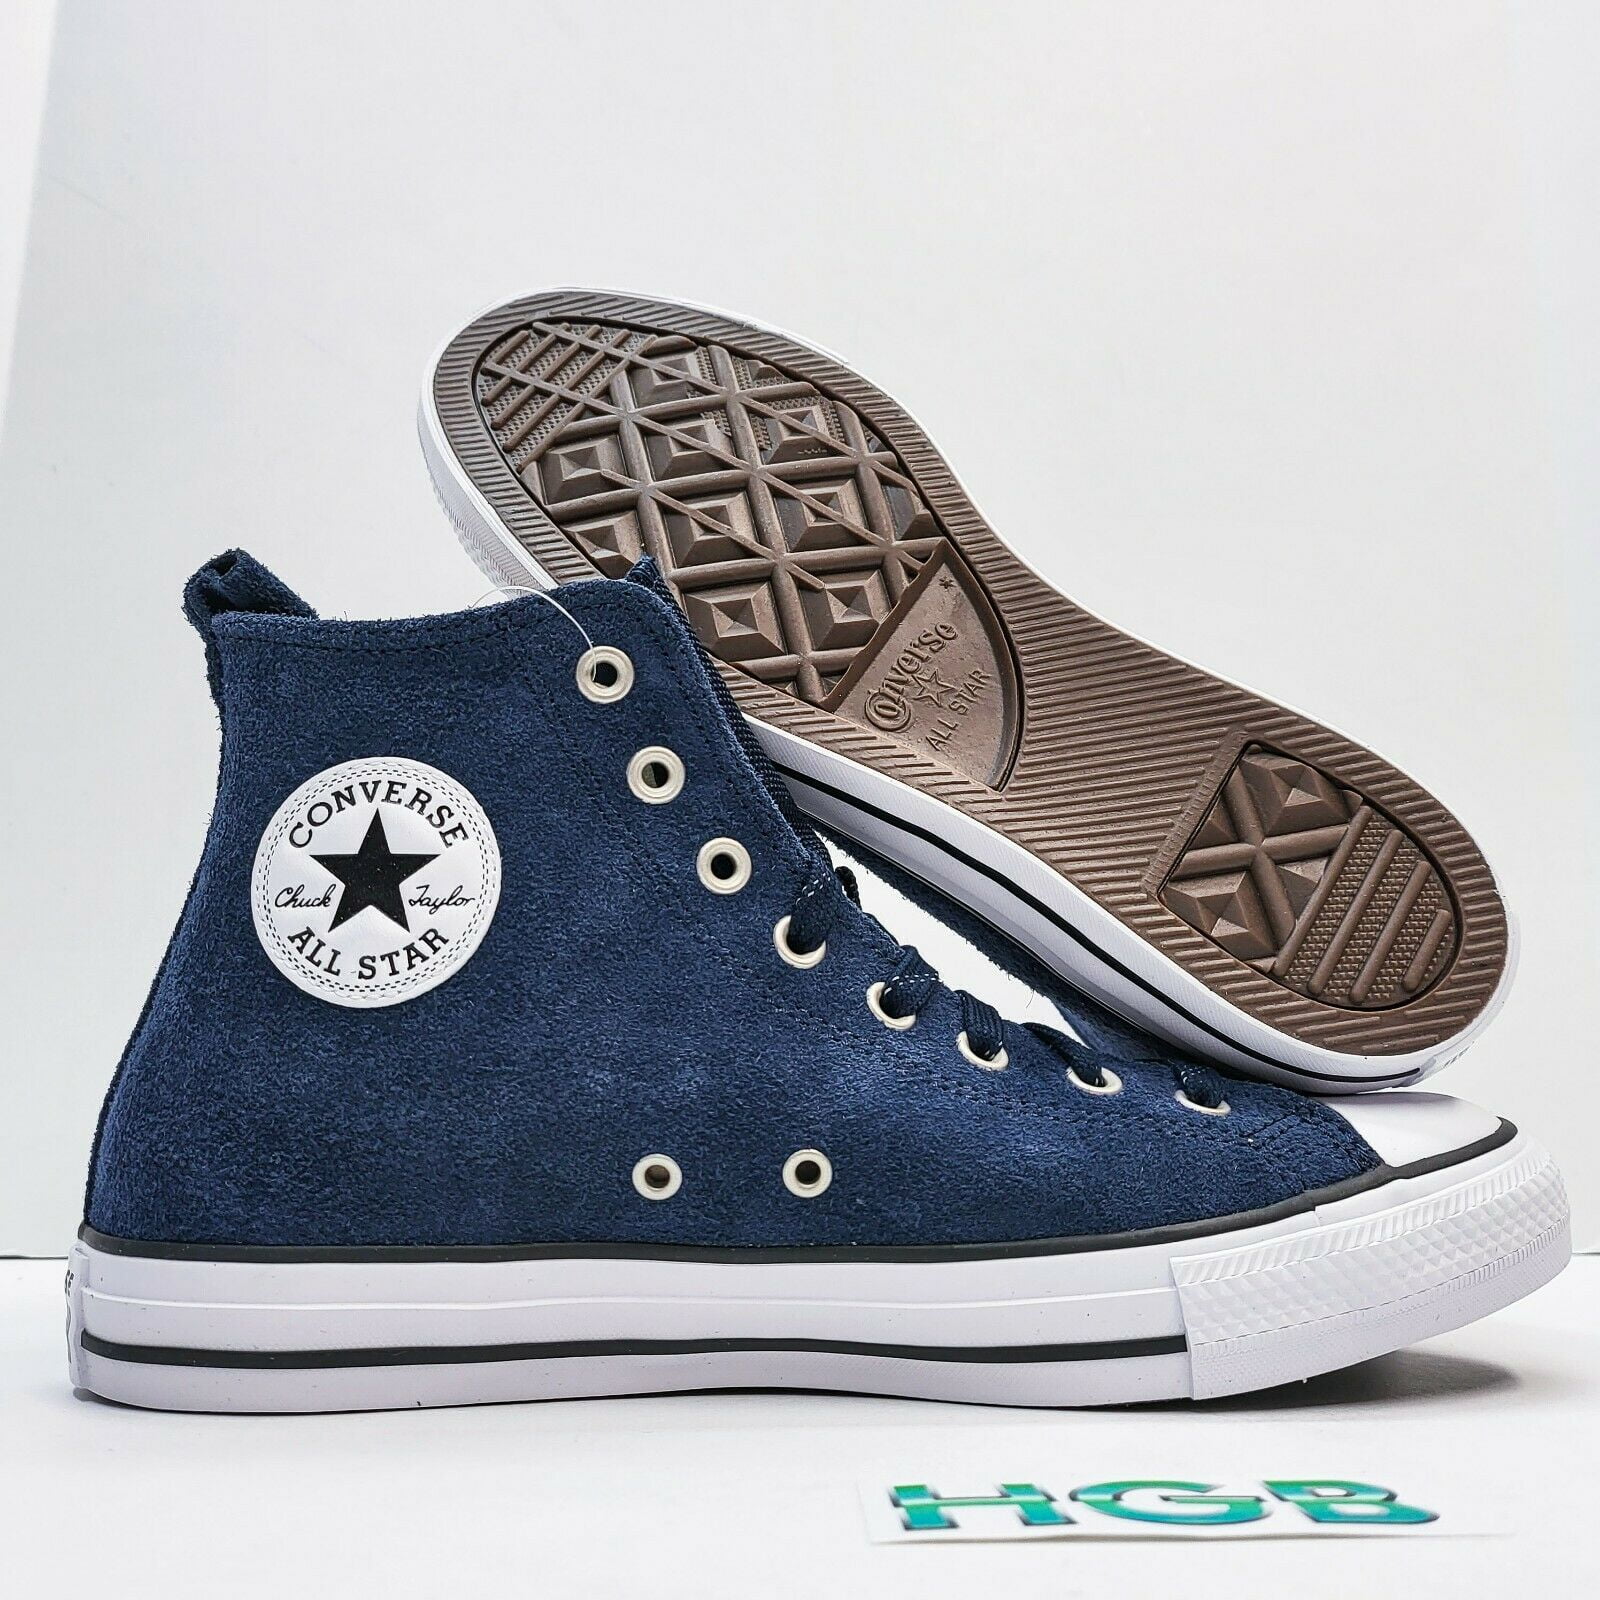 Tumba por favor confirmar Entender Converse Chuck Taylor All Star Hi Men's Blue Suede Limited Sneaker Shoe  170023C - Walmart.com